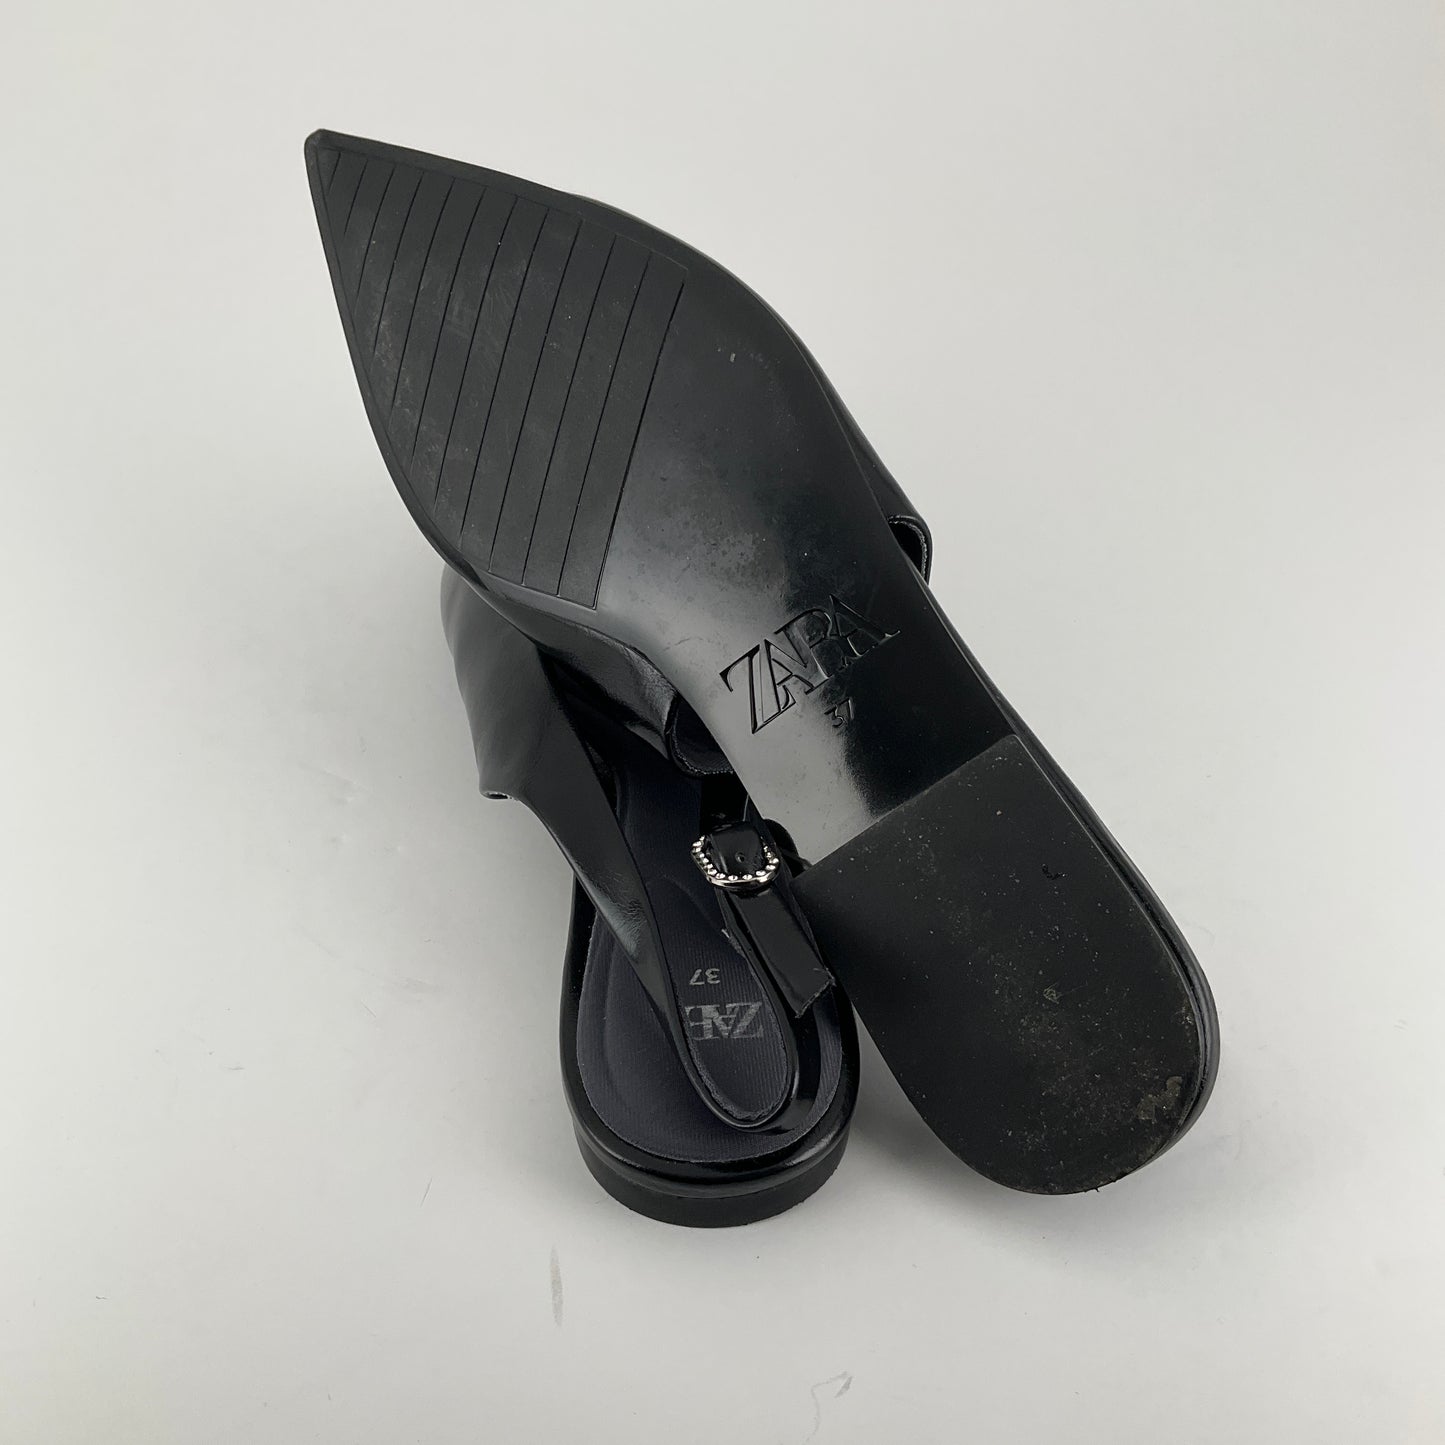 Zara - Closed Toe Sandals - Size 37